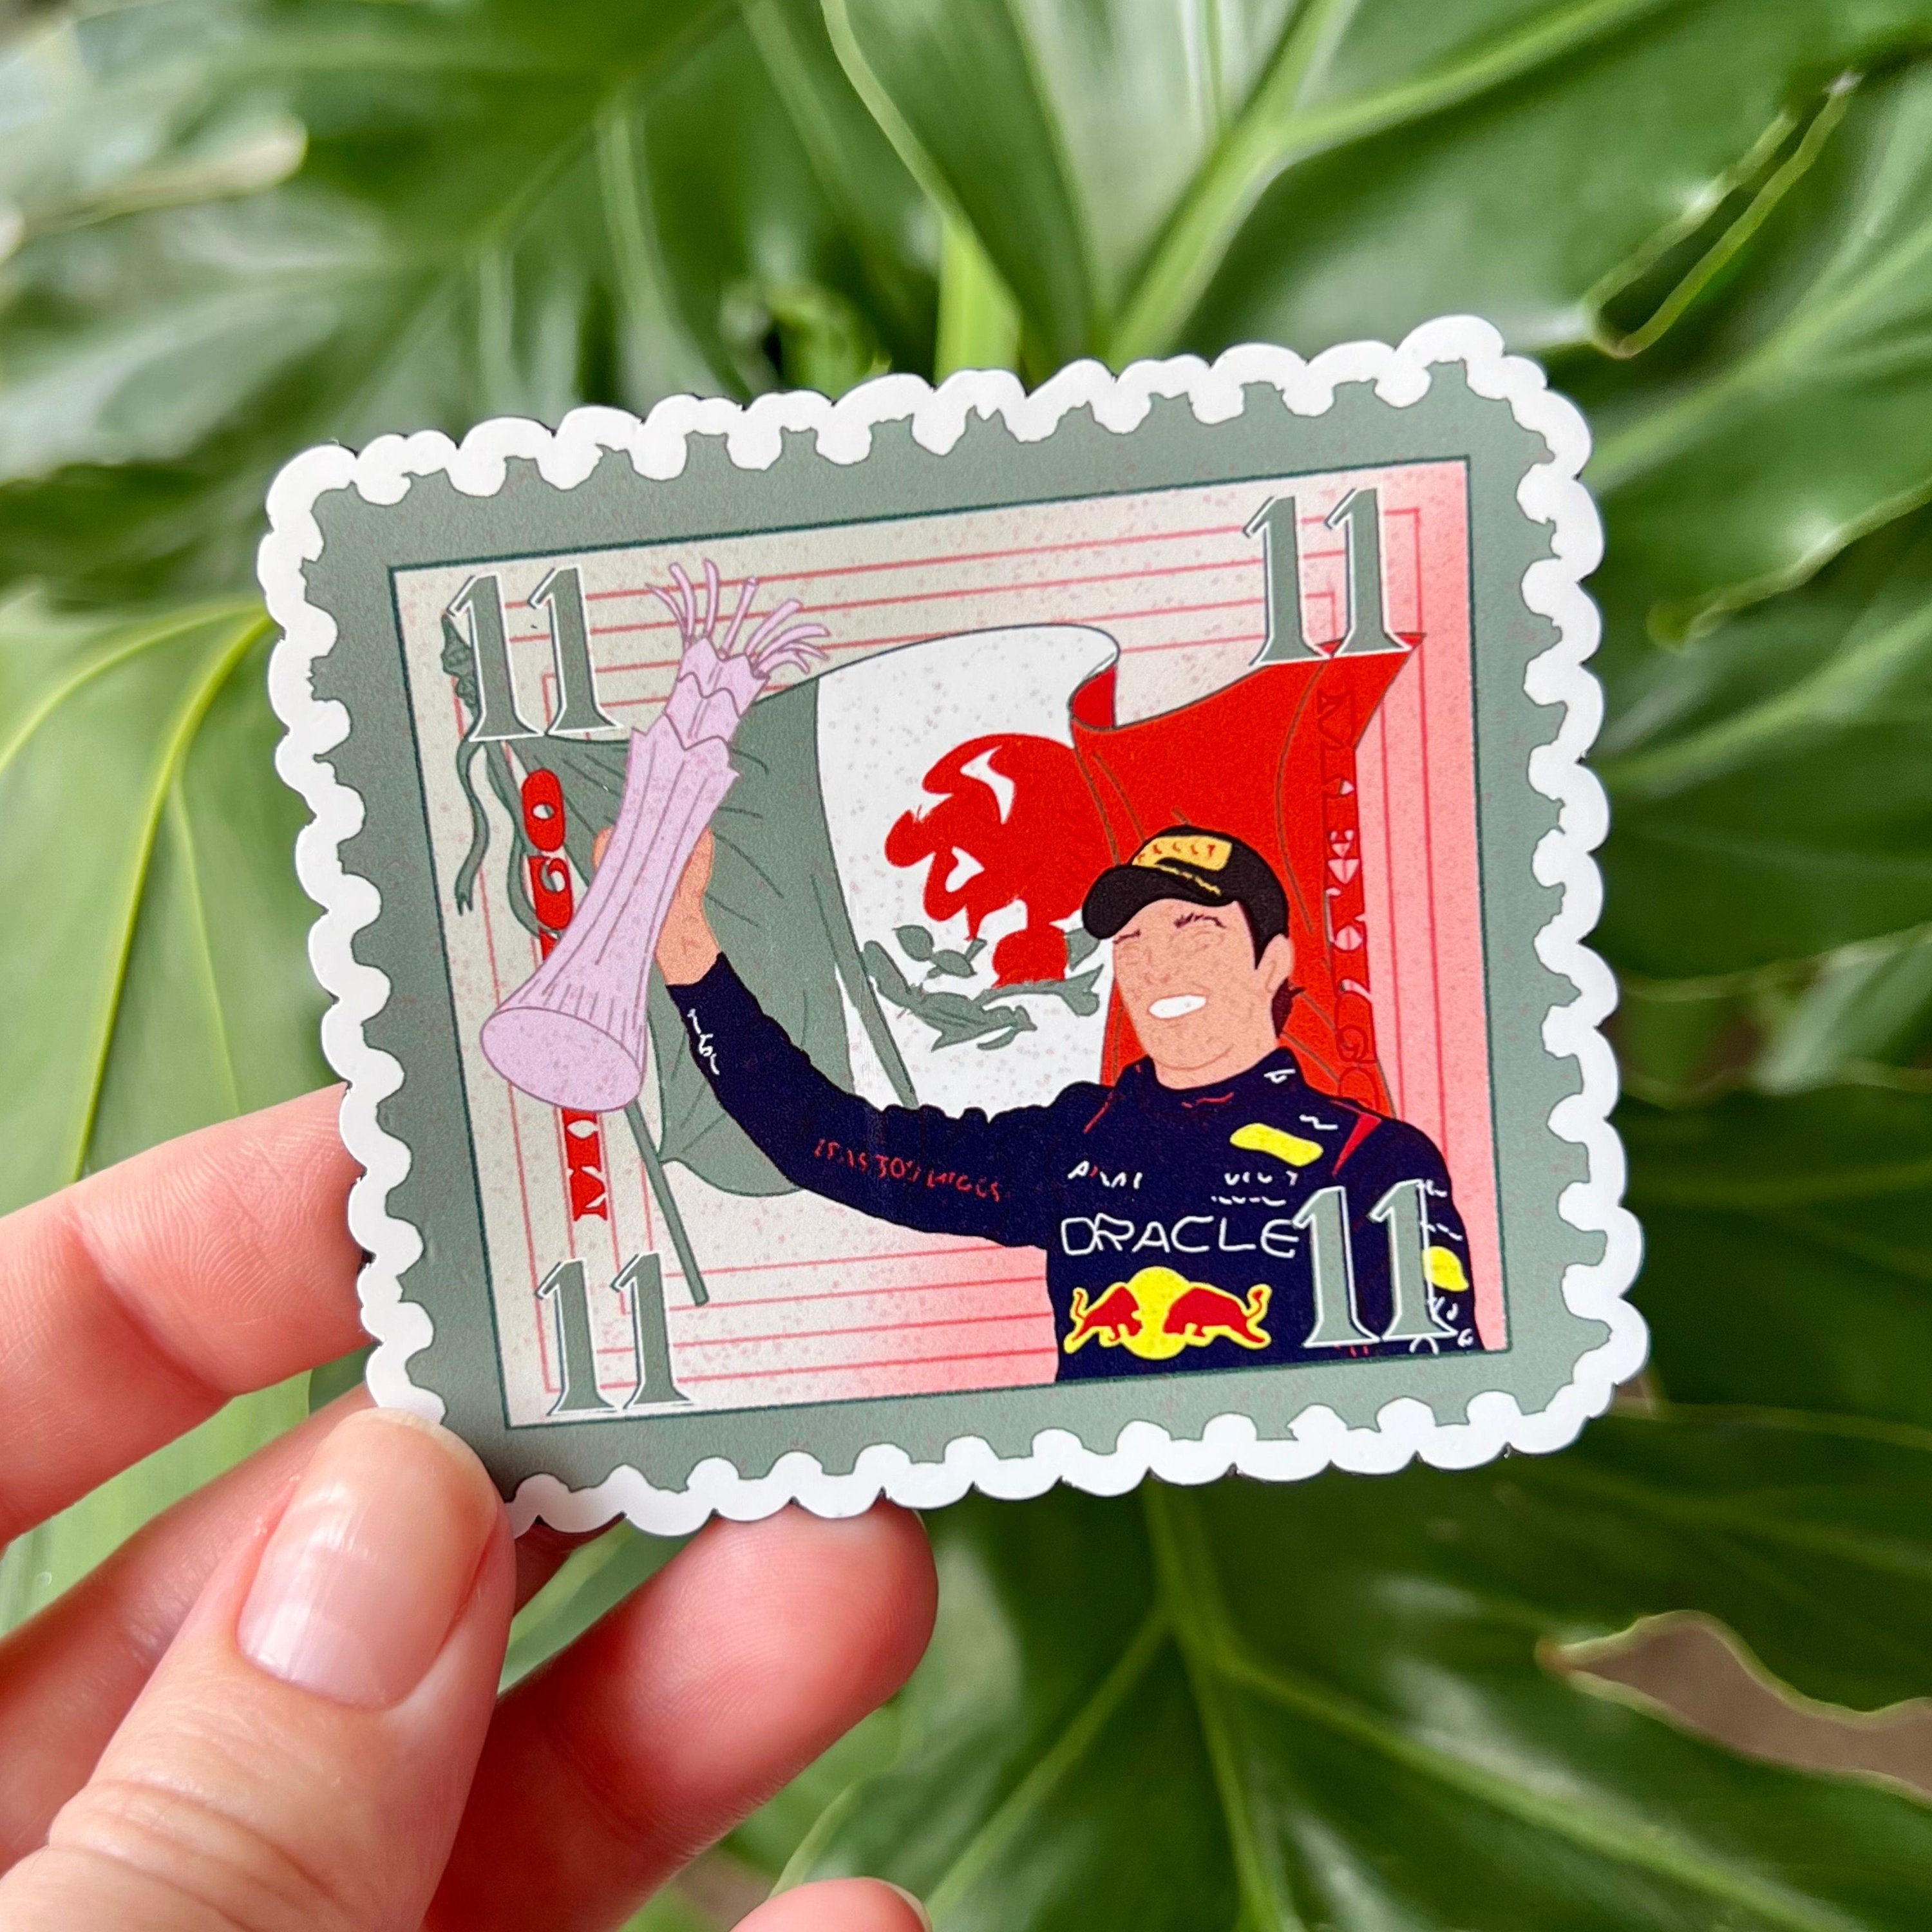 F1 stamp magnets